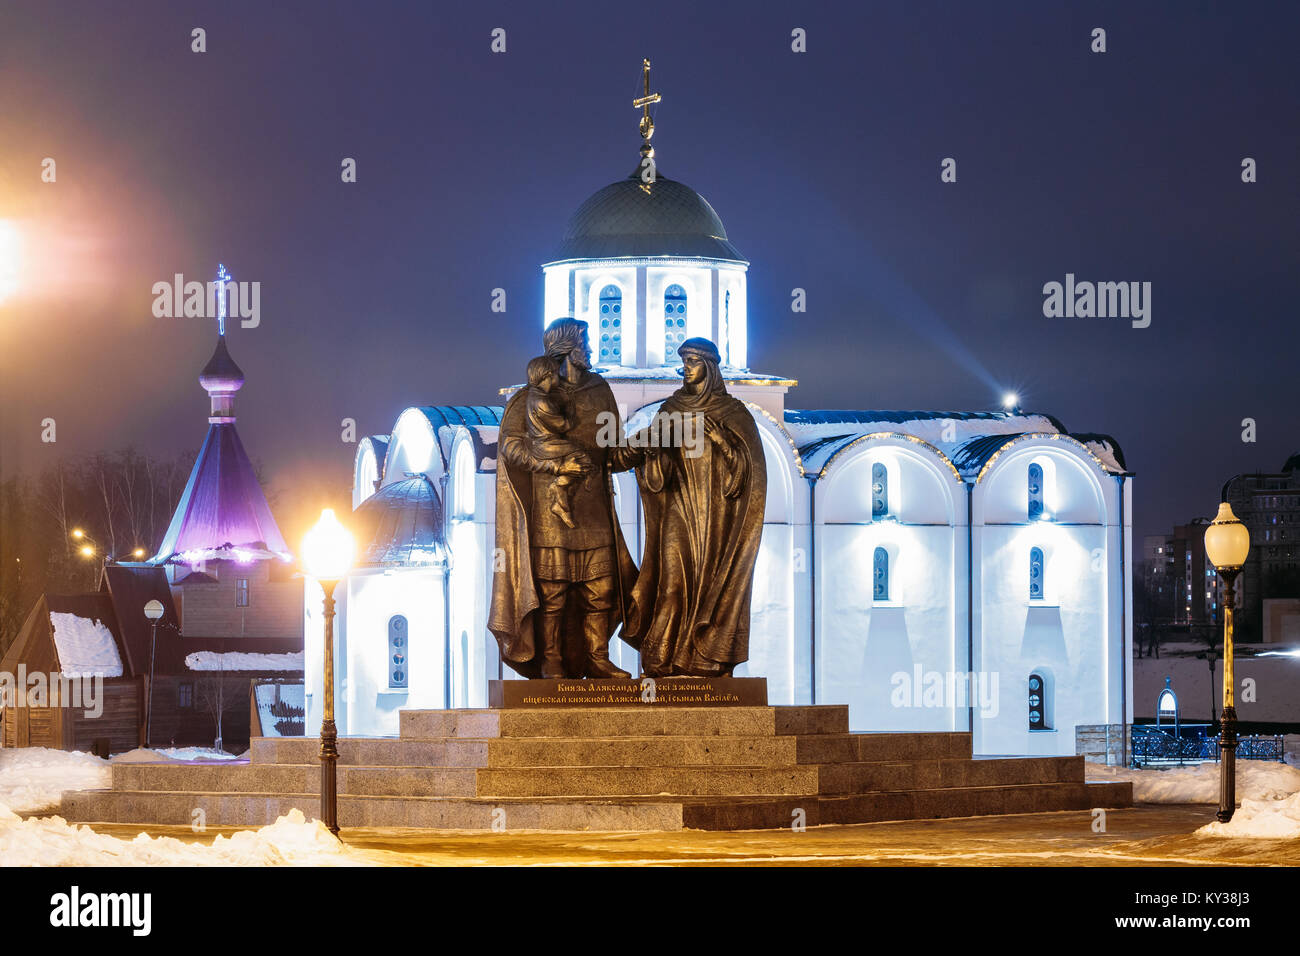 Vitebsk, Belarus - February 13, 2017: Sculpture With Prince Alexander Nevsky, His Wife Vitebsk Princess Alexandra And Their Son Vasily On Millennium S Stock Photo